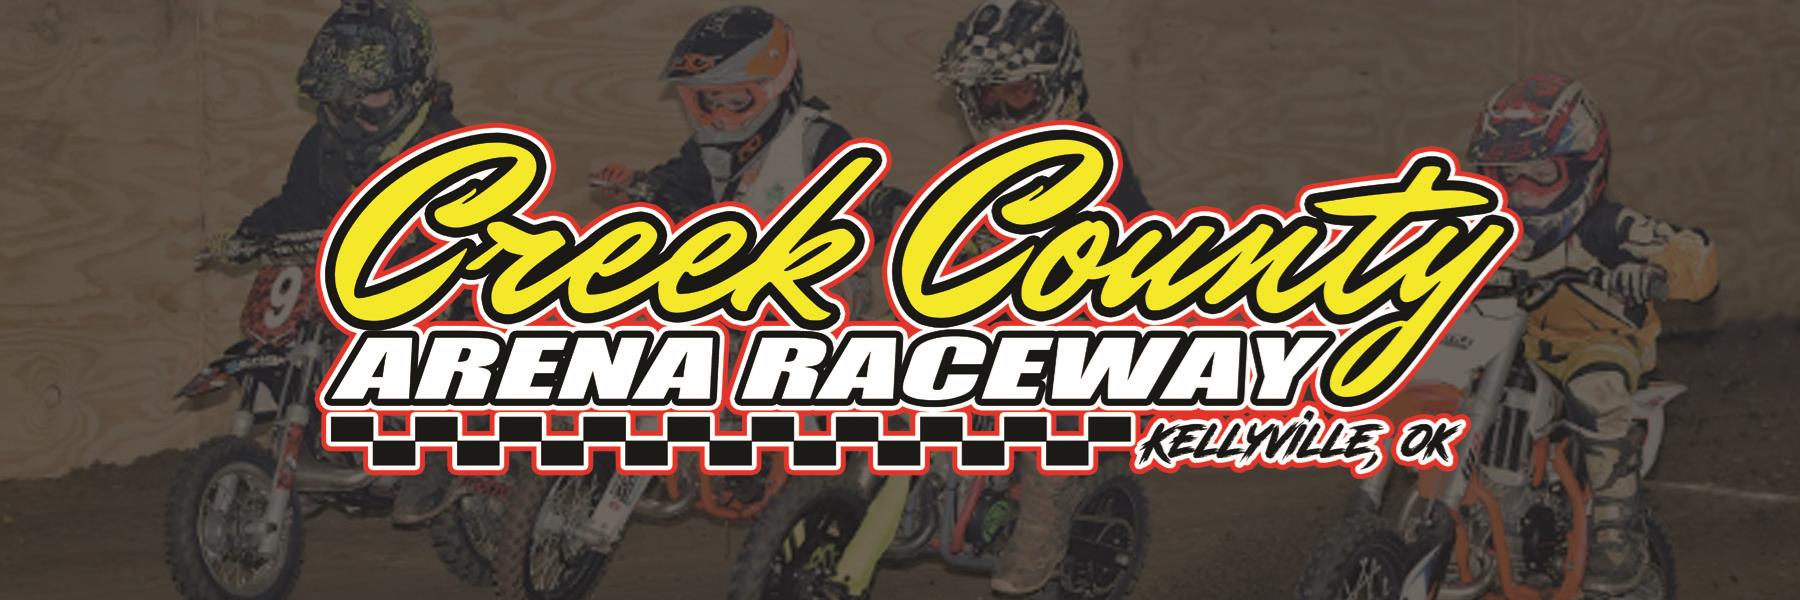 1/22/2022 - Creek County Arena Raceway